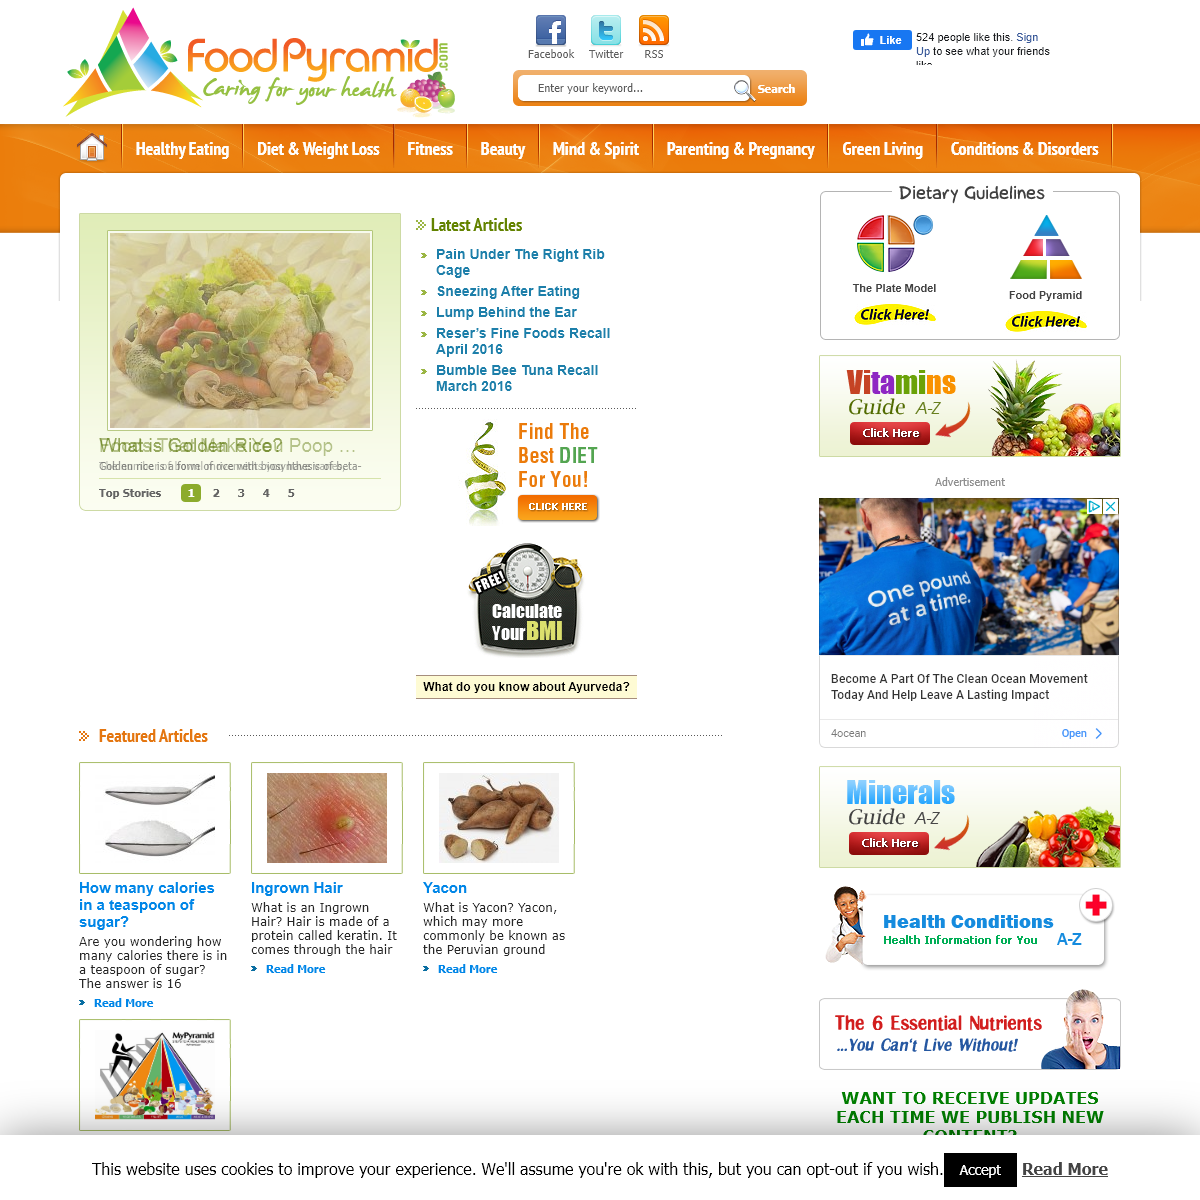 A complete backup of foodpyramid.com